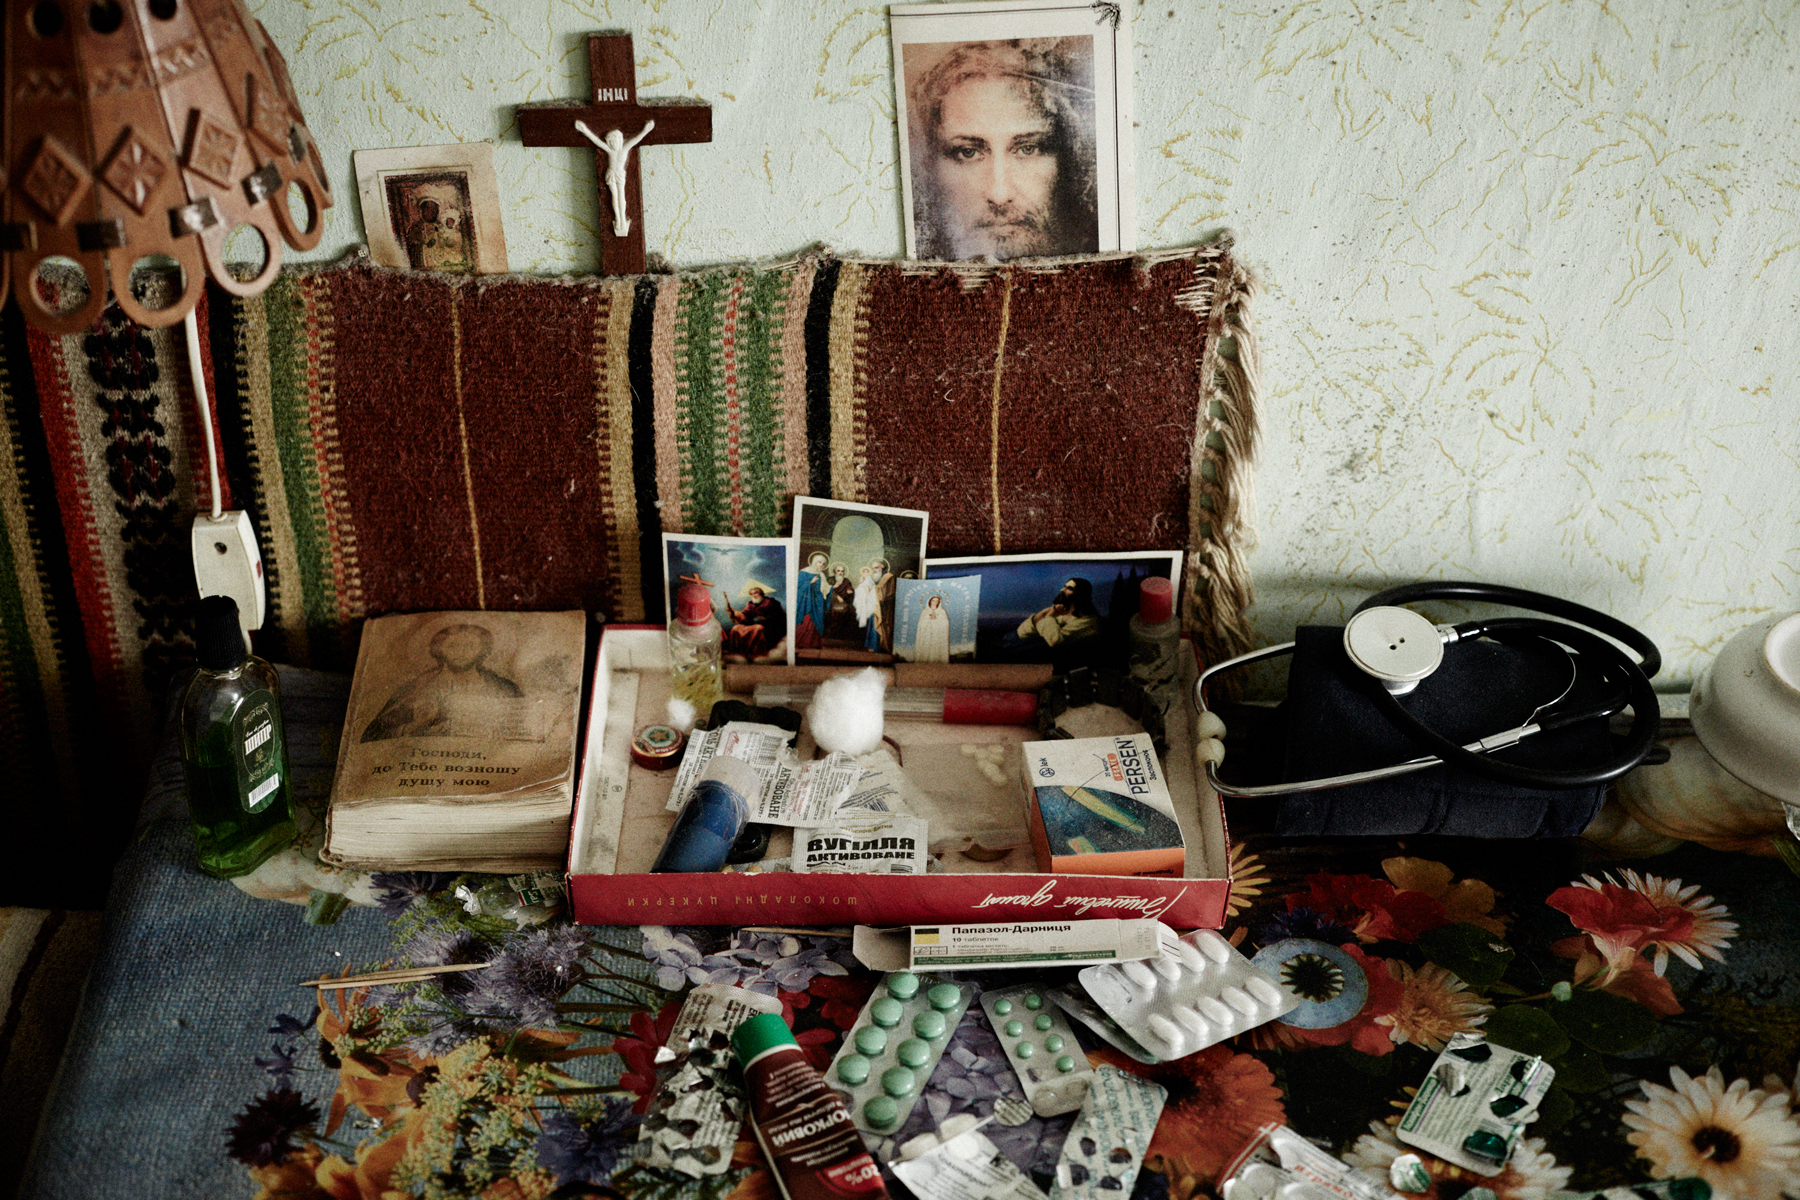 Medicine and religious items, Kalush, February 2014